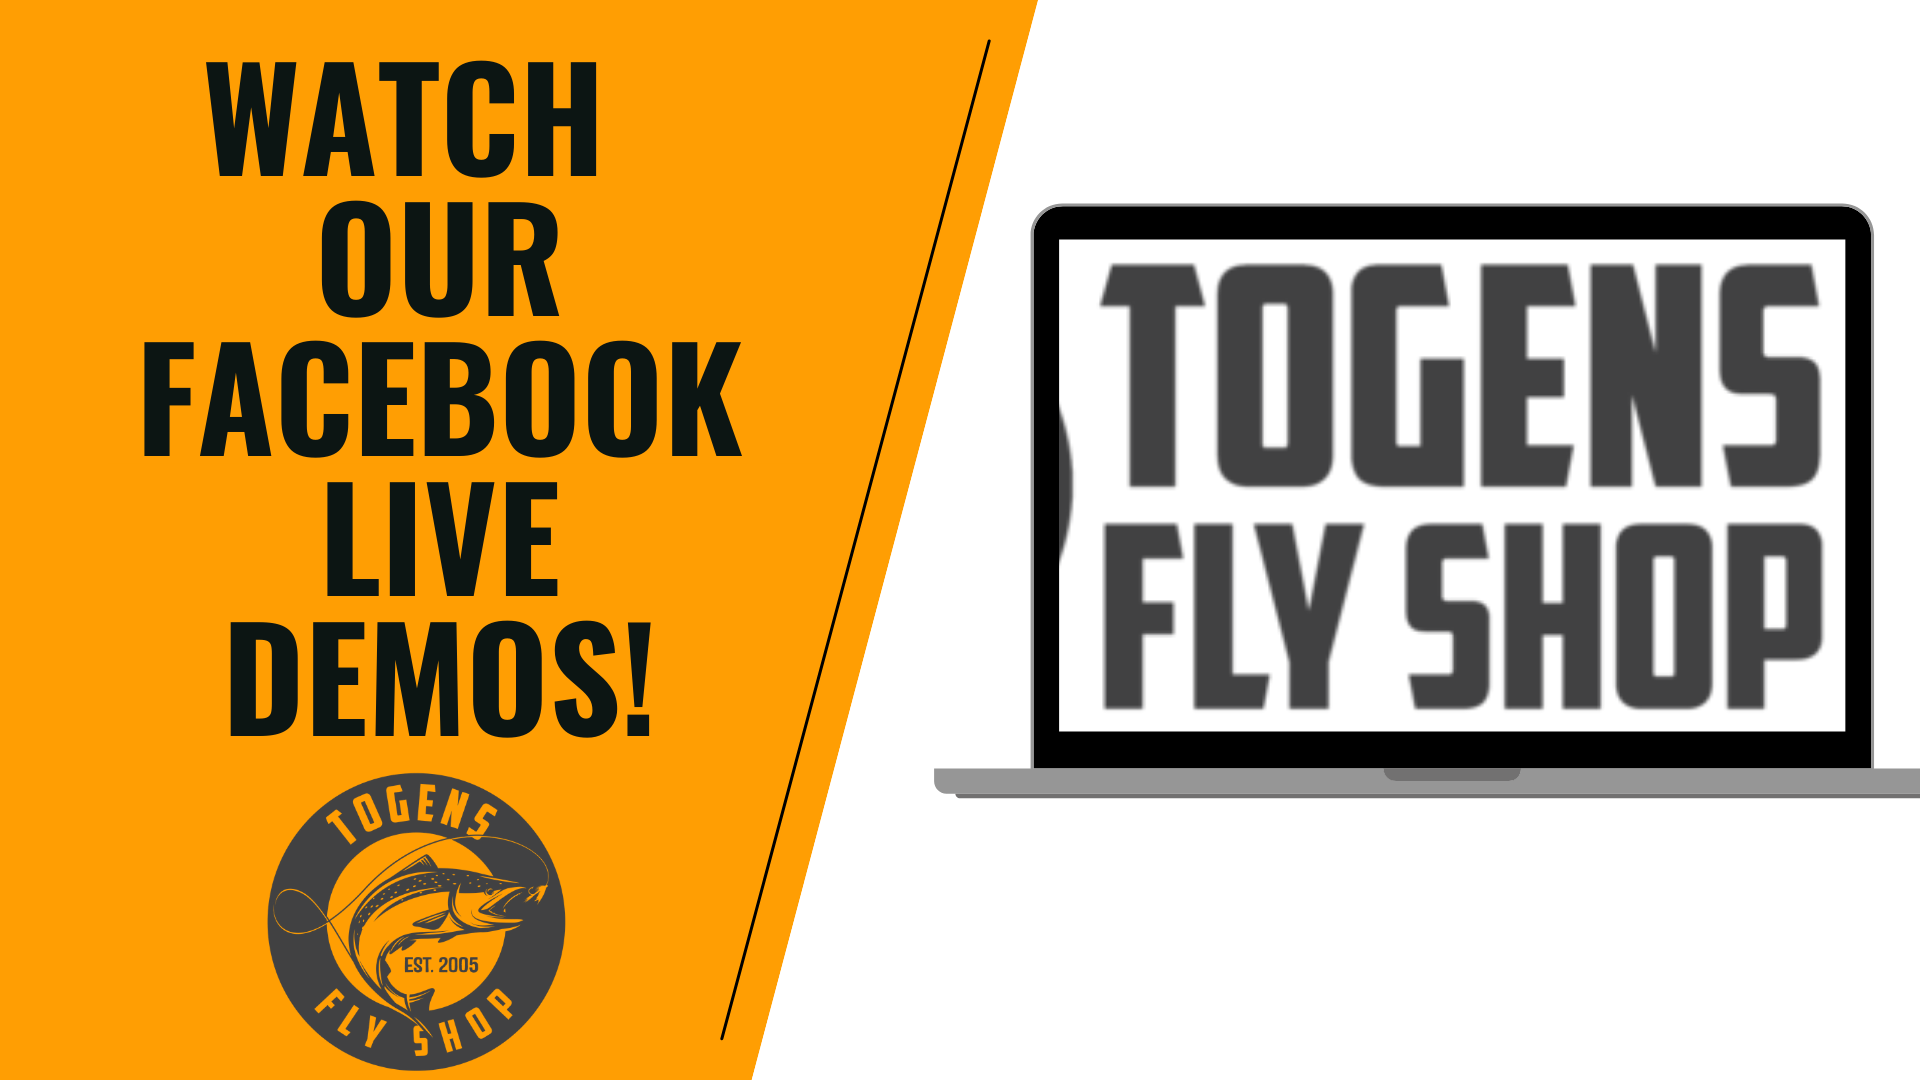 Facebook Tutorial Videos – Togens Fly Shop